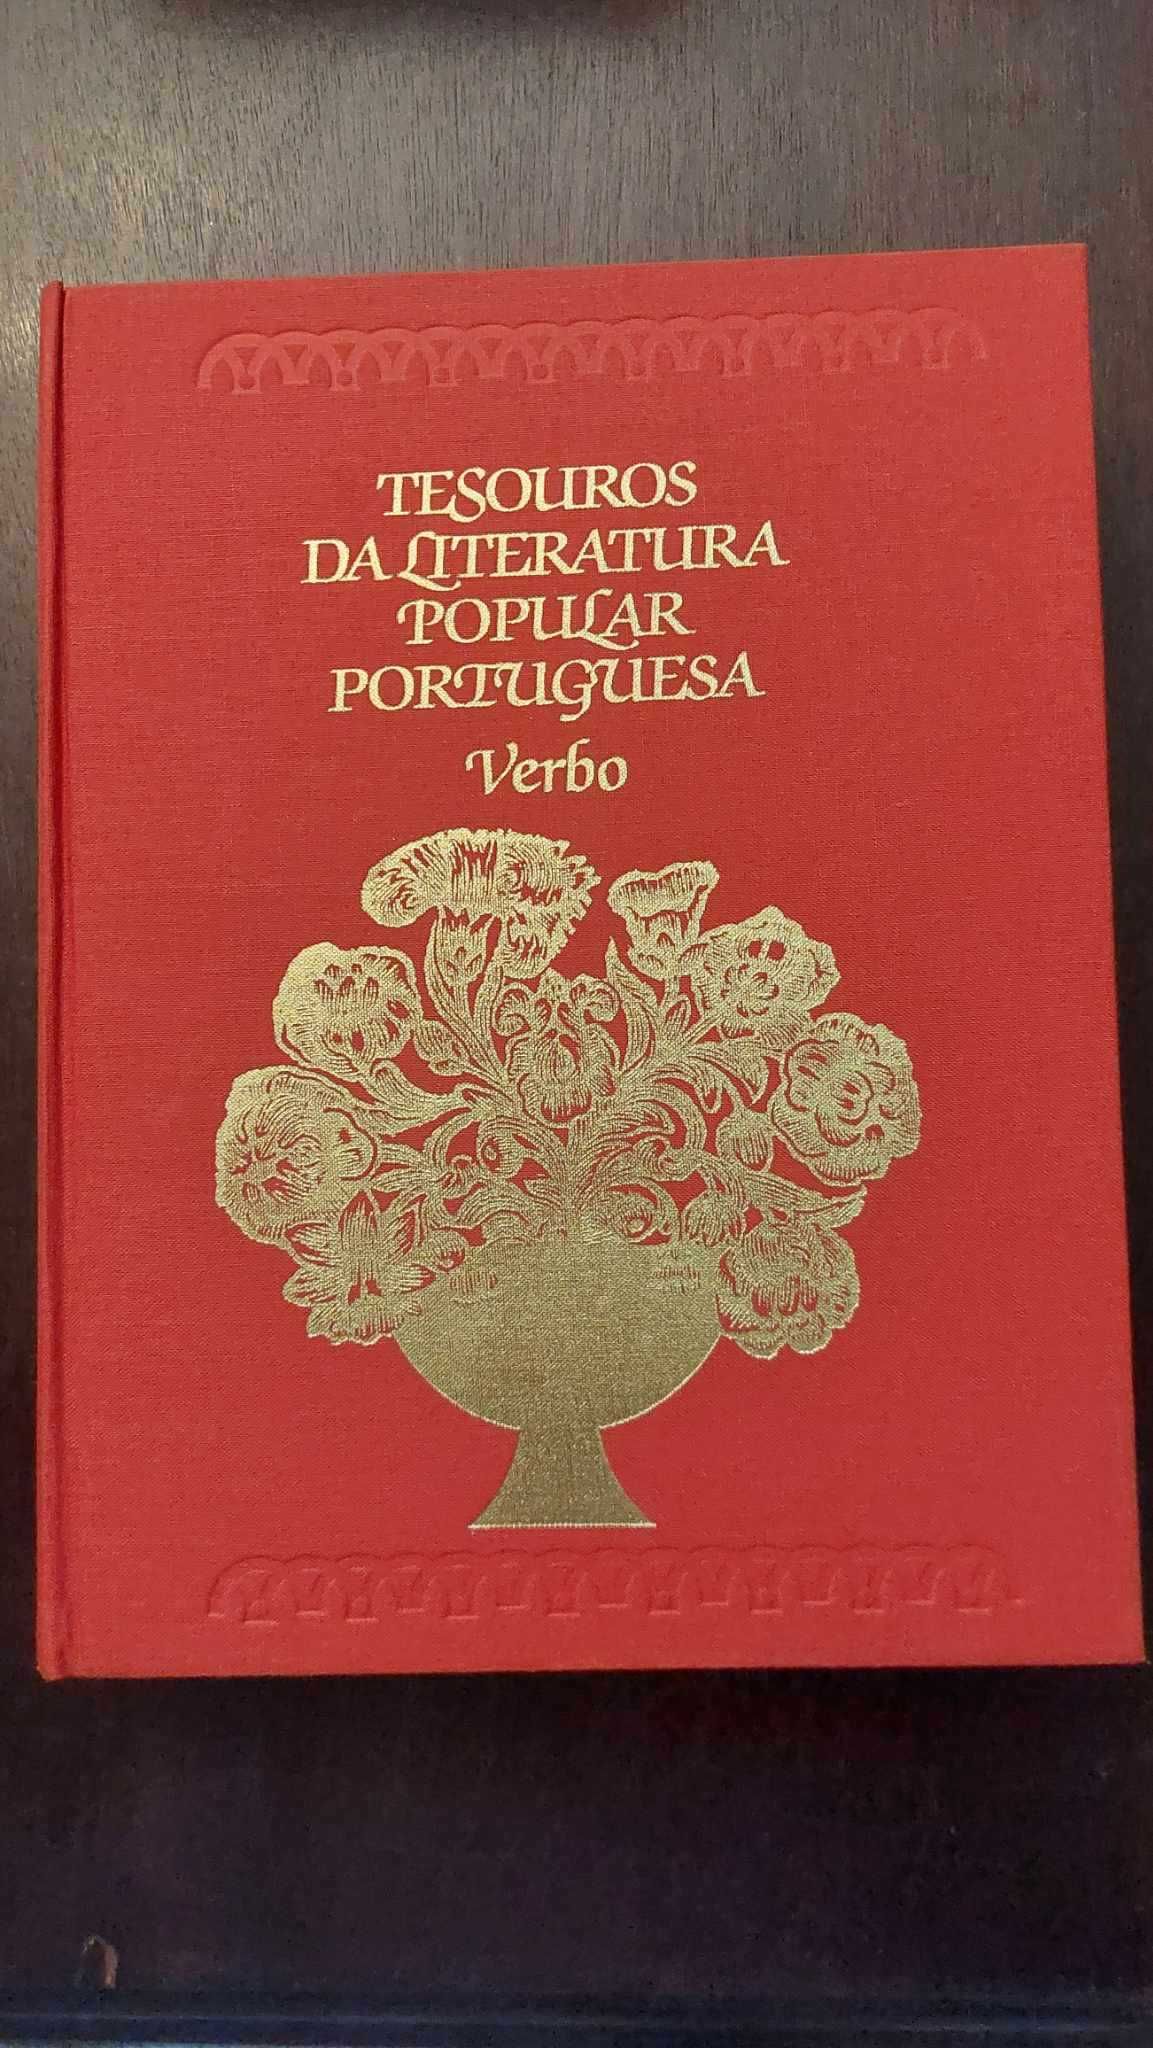 Livro "tesouros da literatura portuguesa"